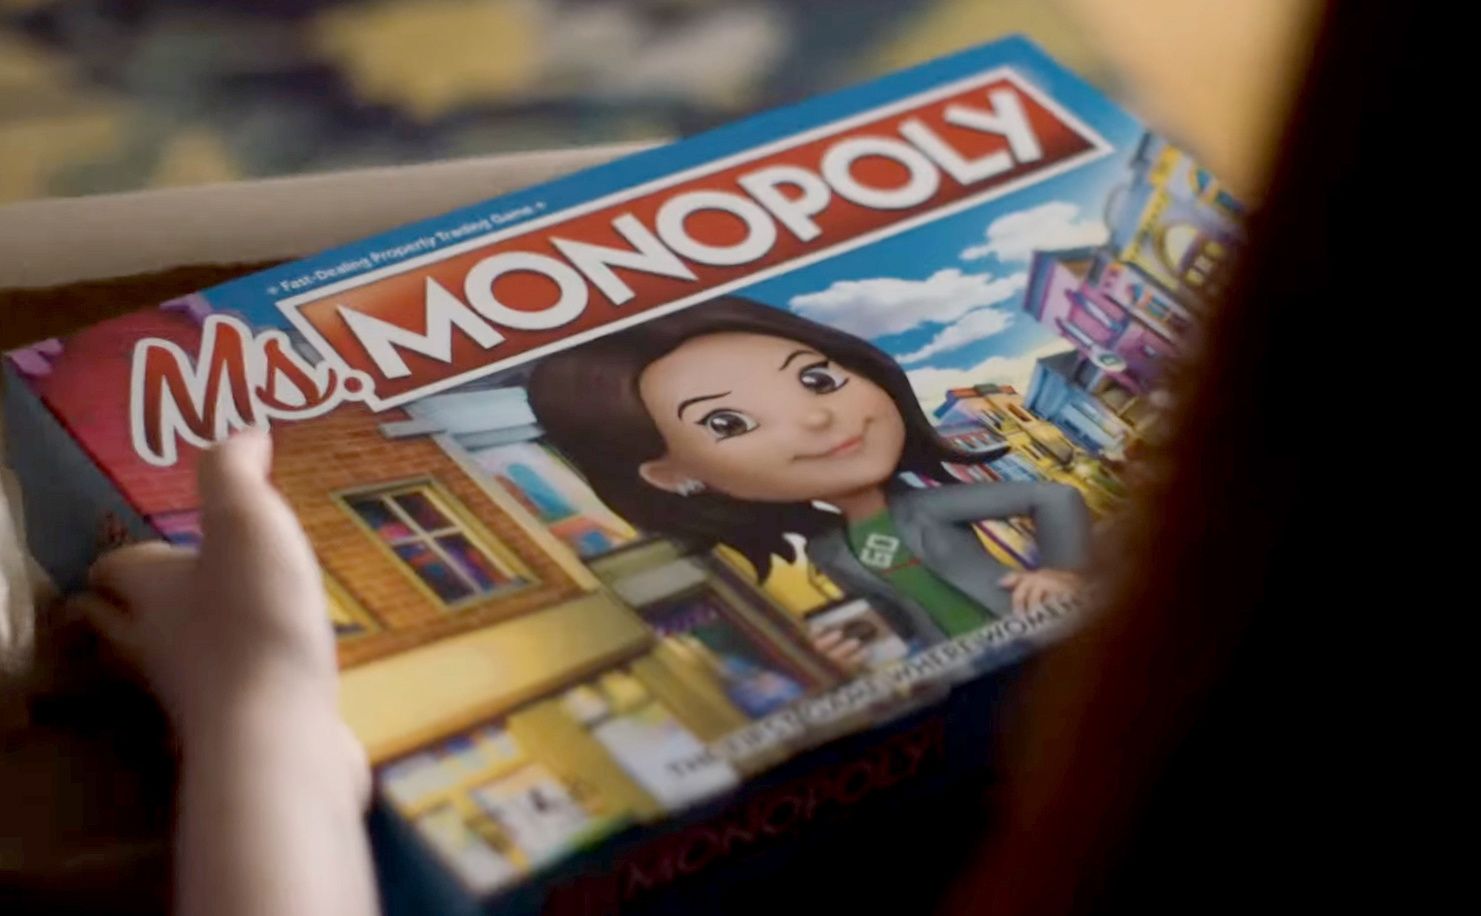 Ms Monopoly Hasbro meeting